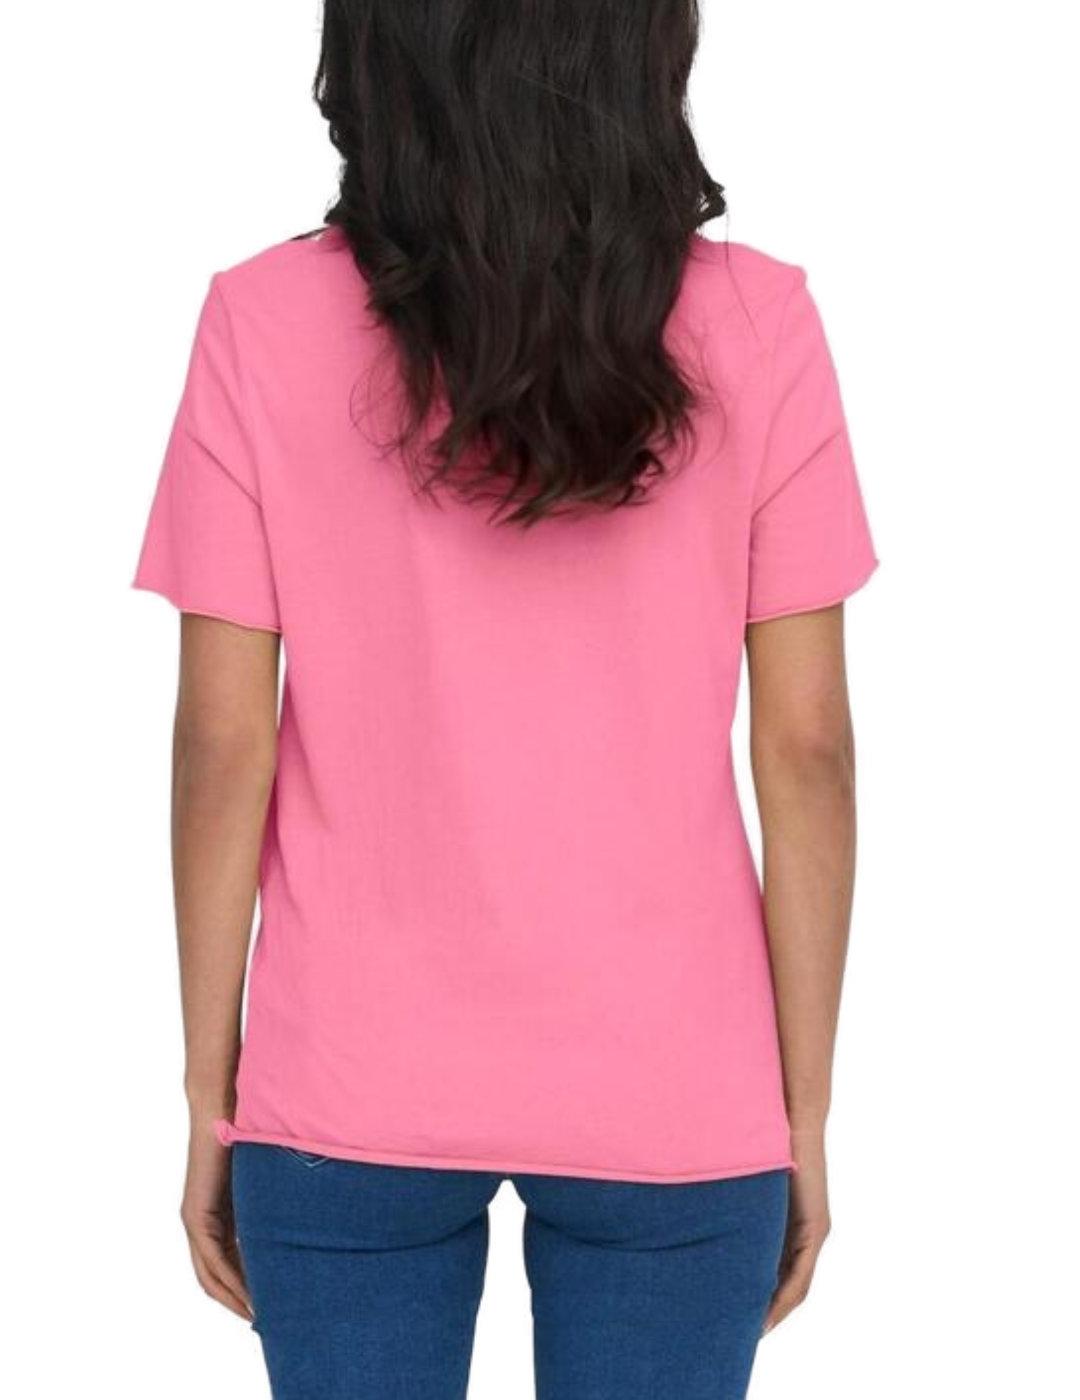 Camiseta Only Lucky rosa gepardo manga corta de mujer